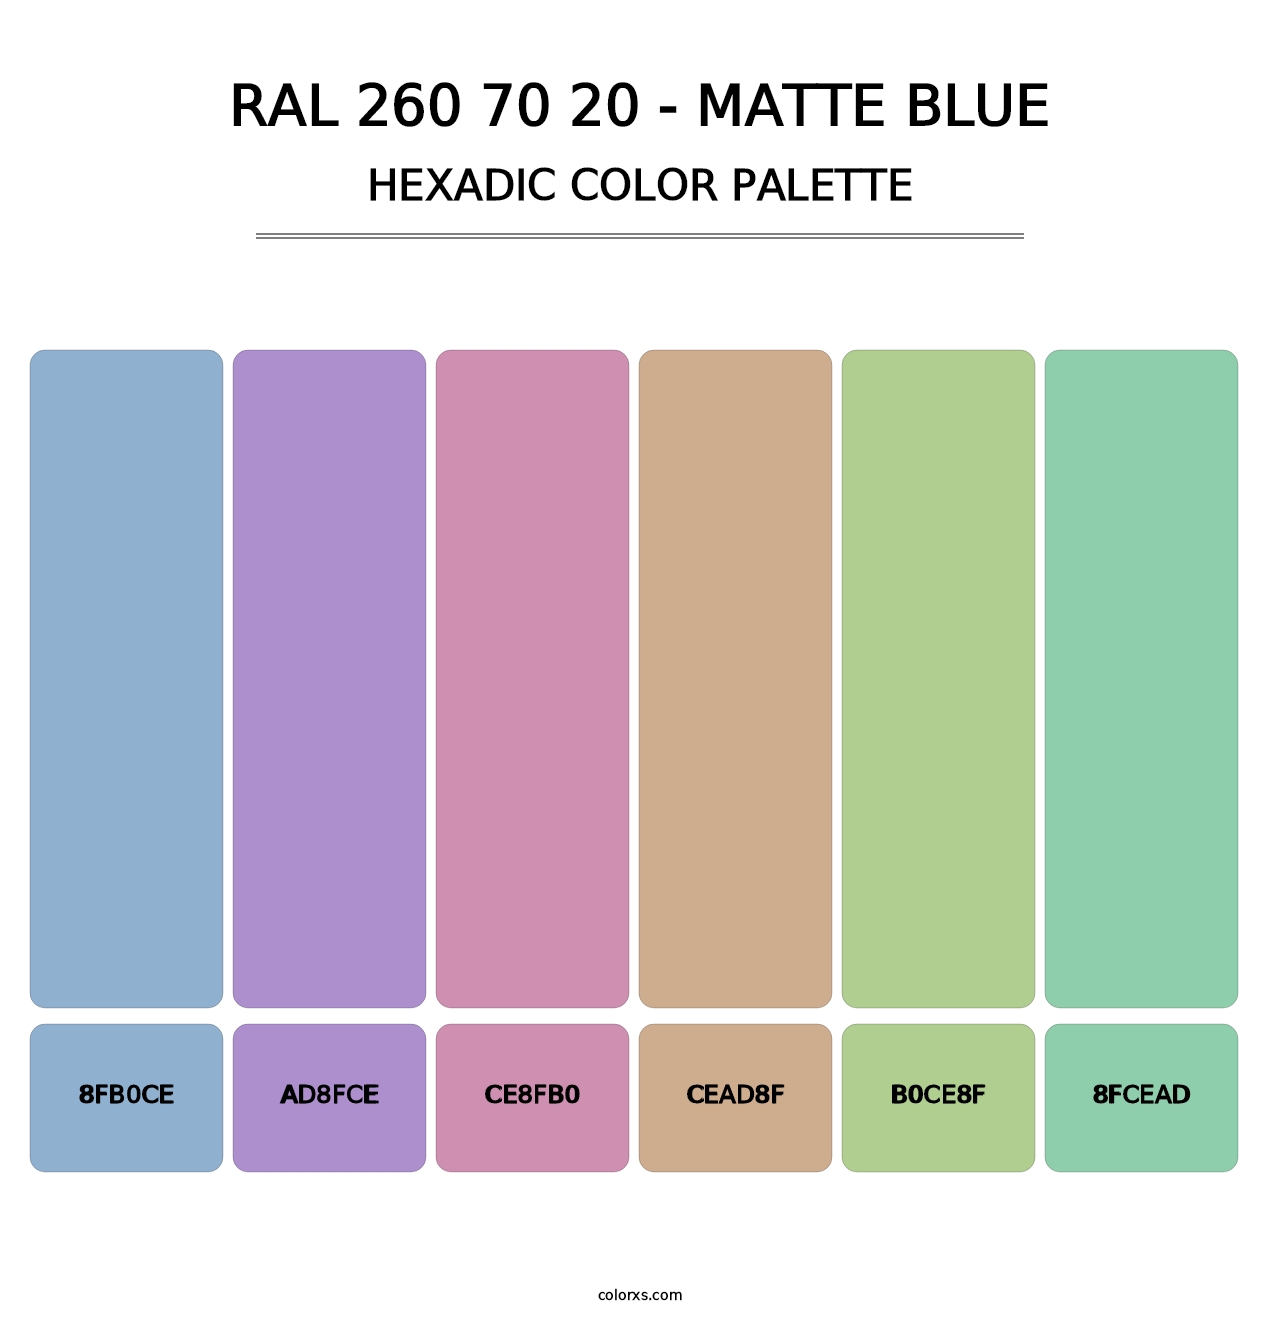 RAL 260 70 20 - Matte Blue - Hexadic Color Palette